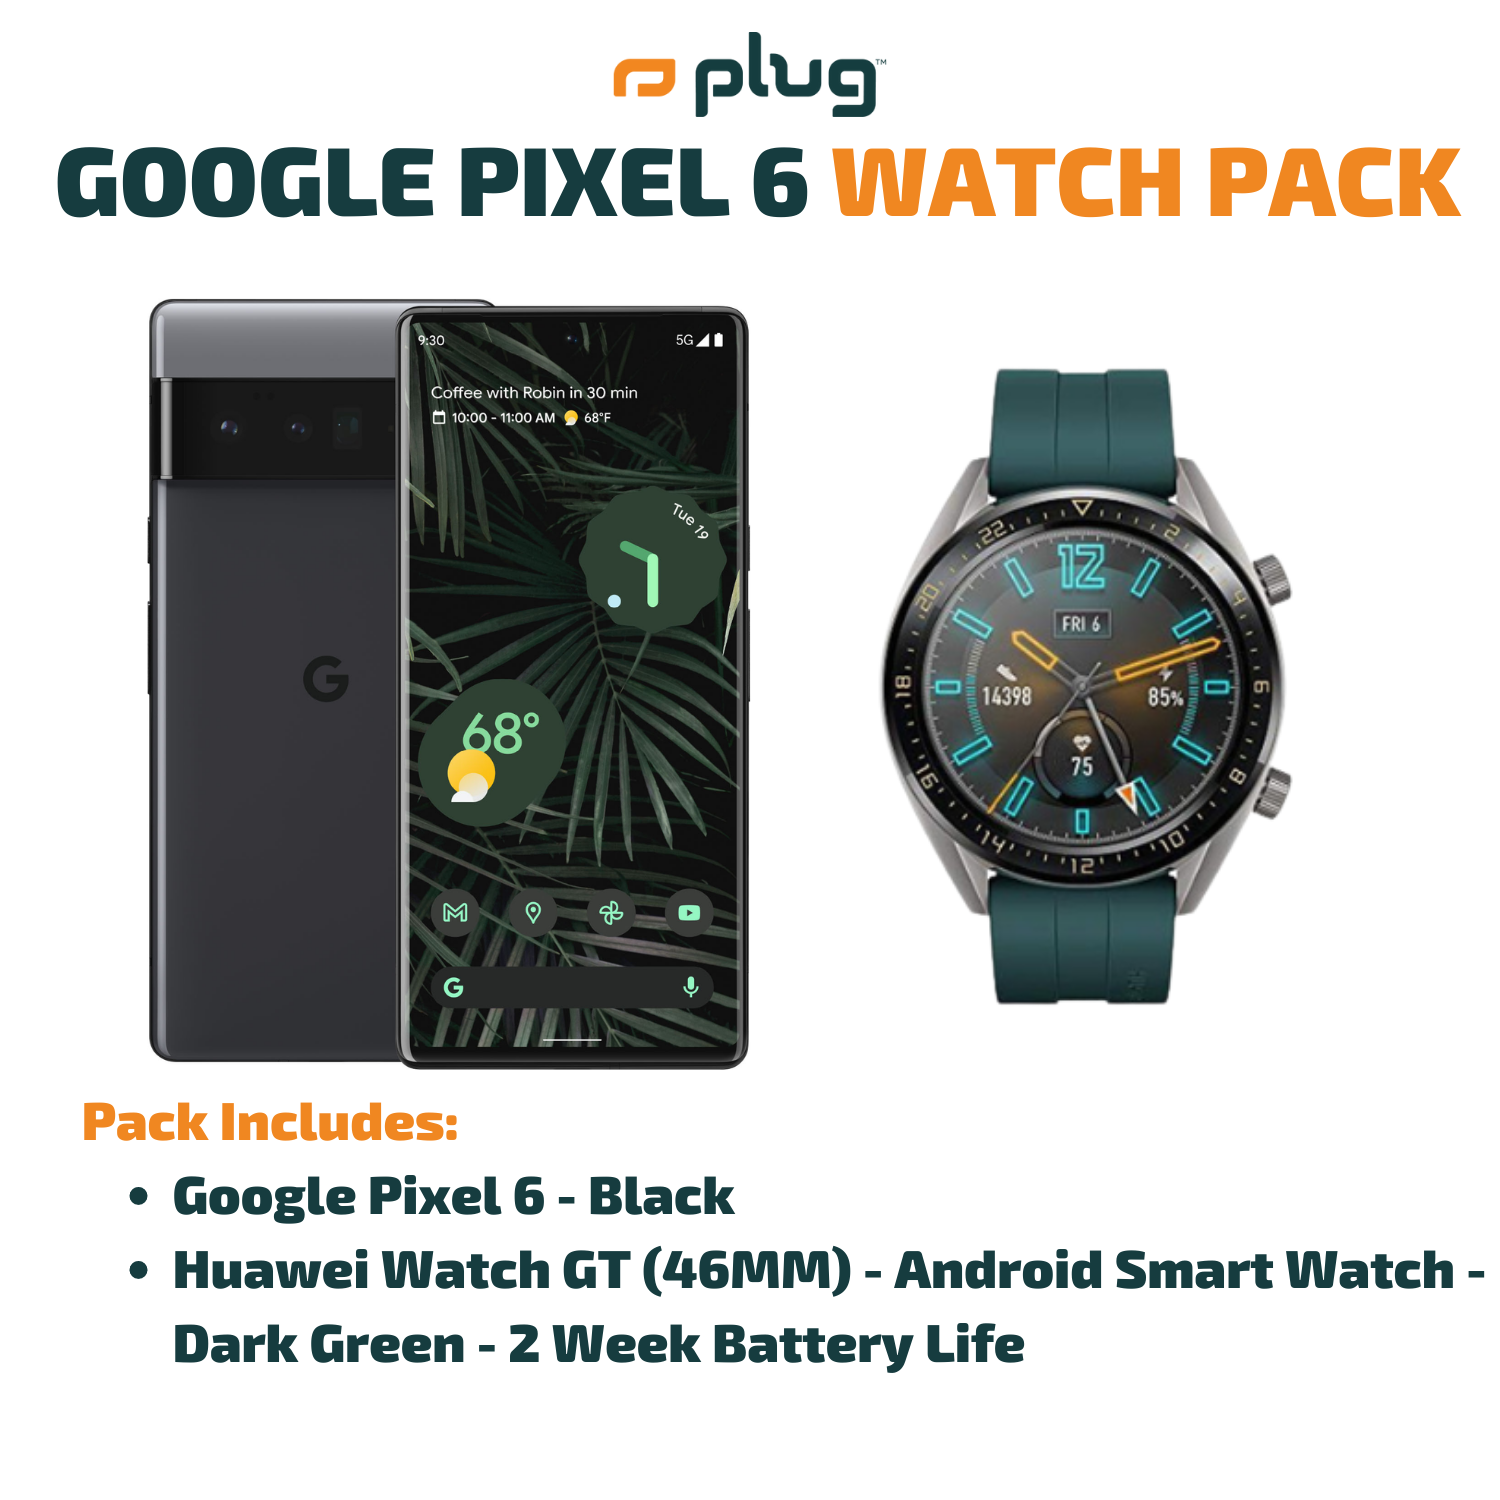 Google Pixel 6 + Watch Pack